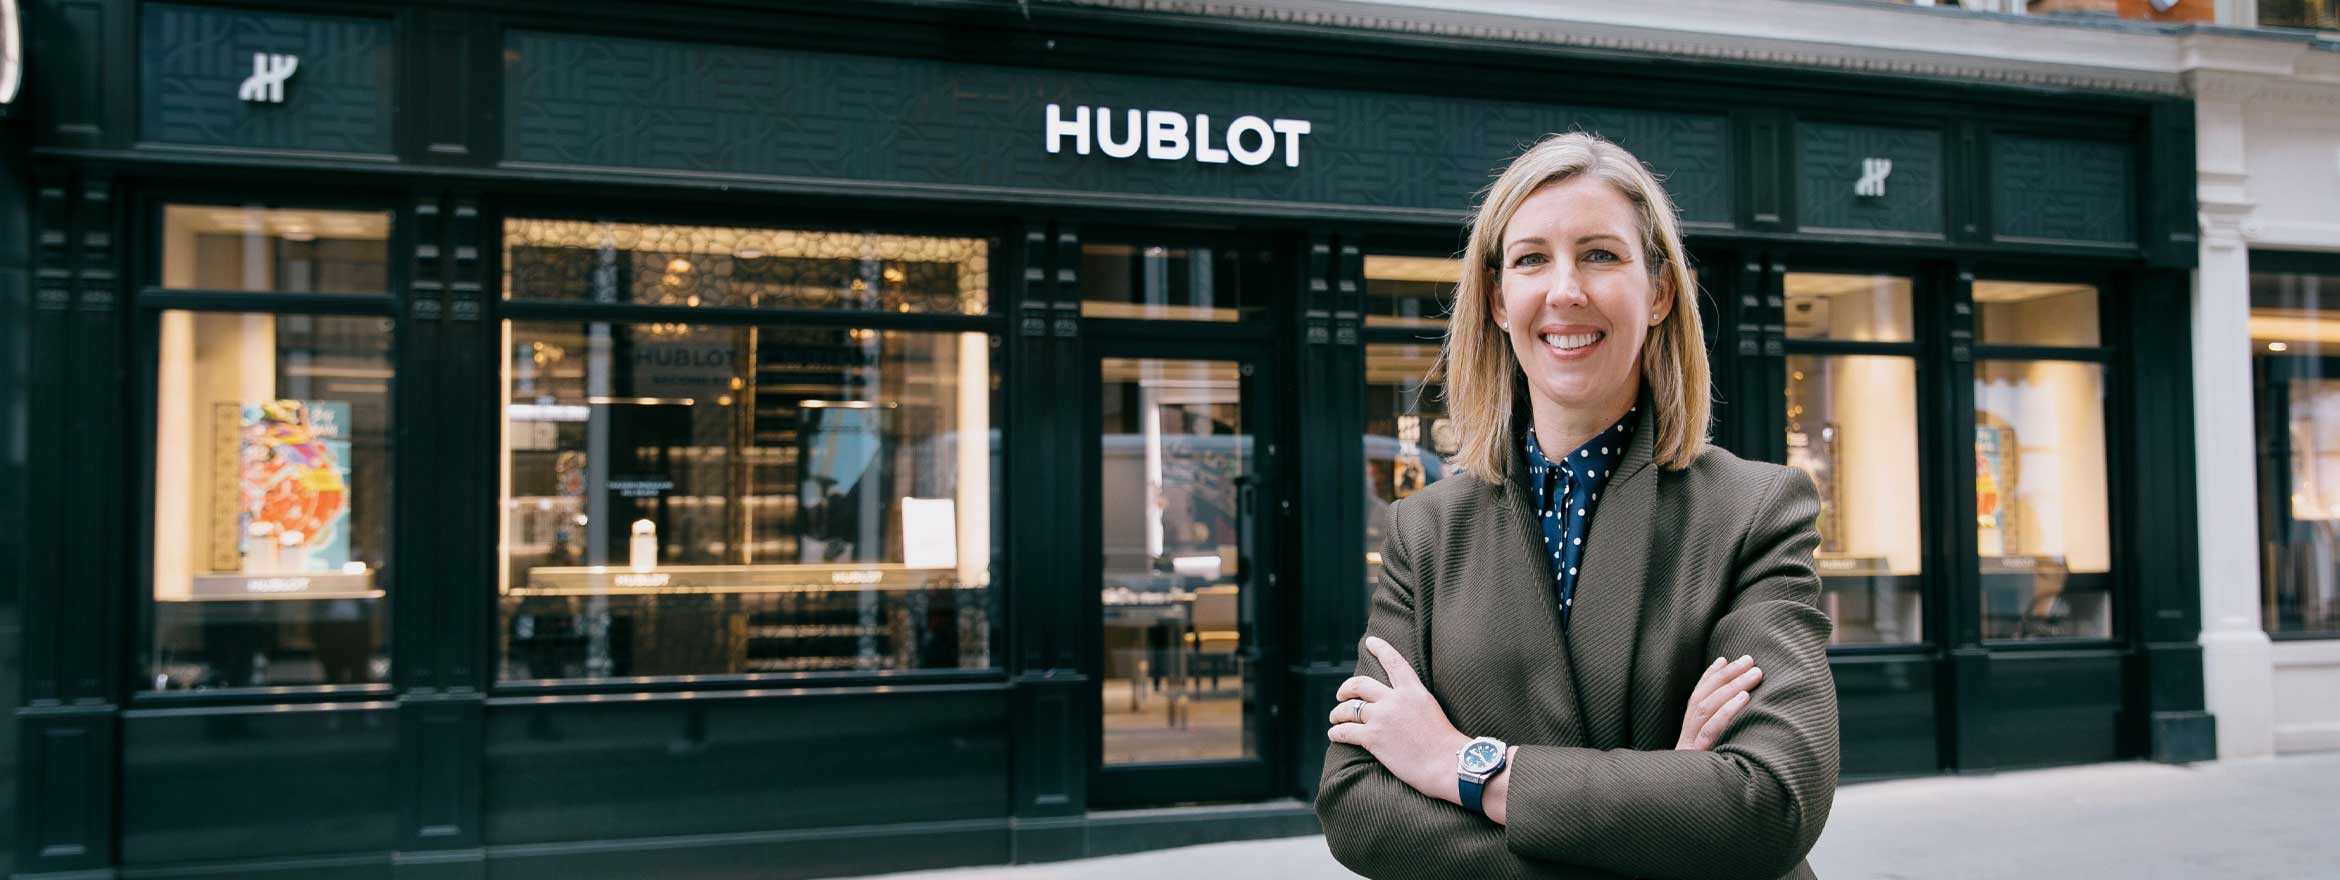 Hublot Welcomes Clare Smyth